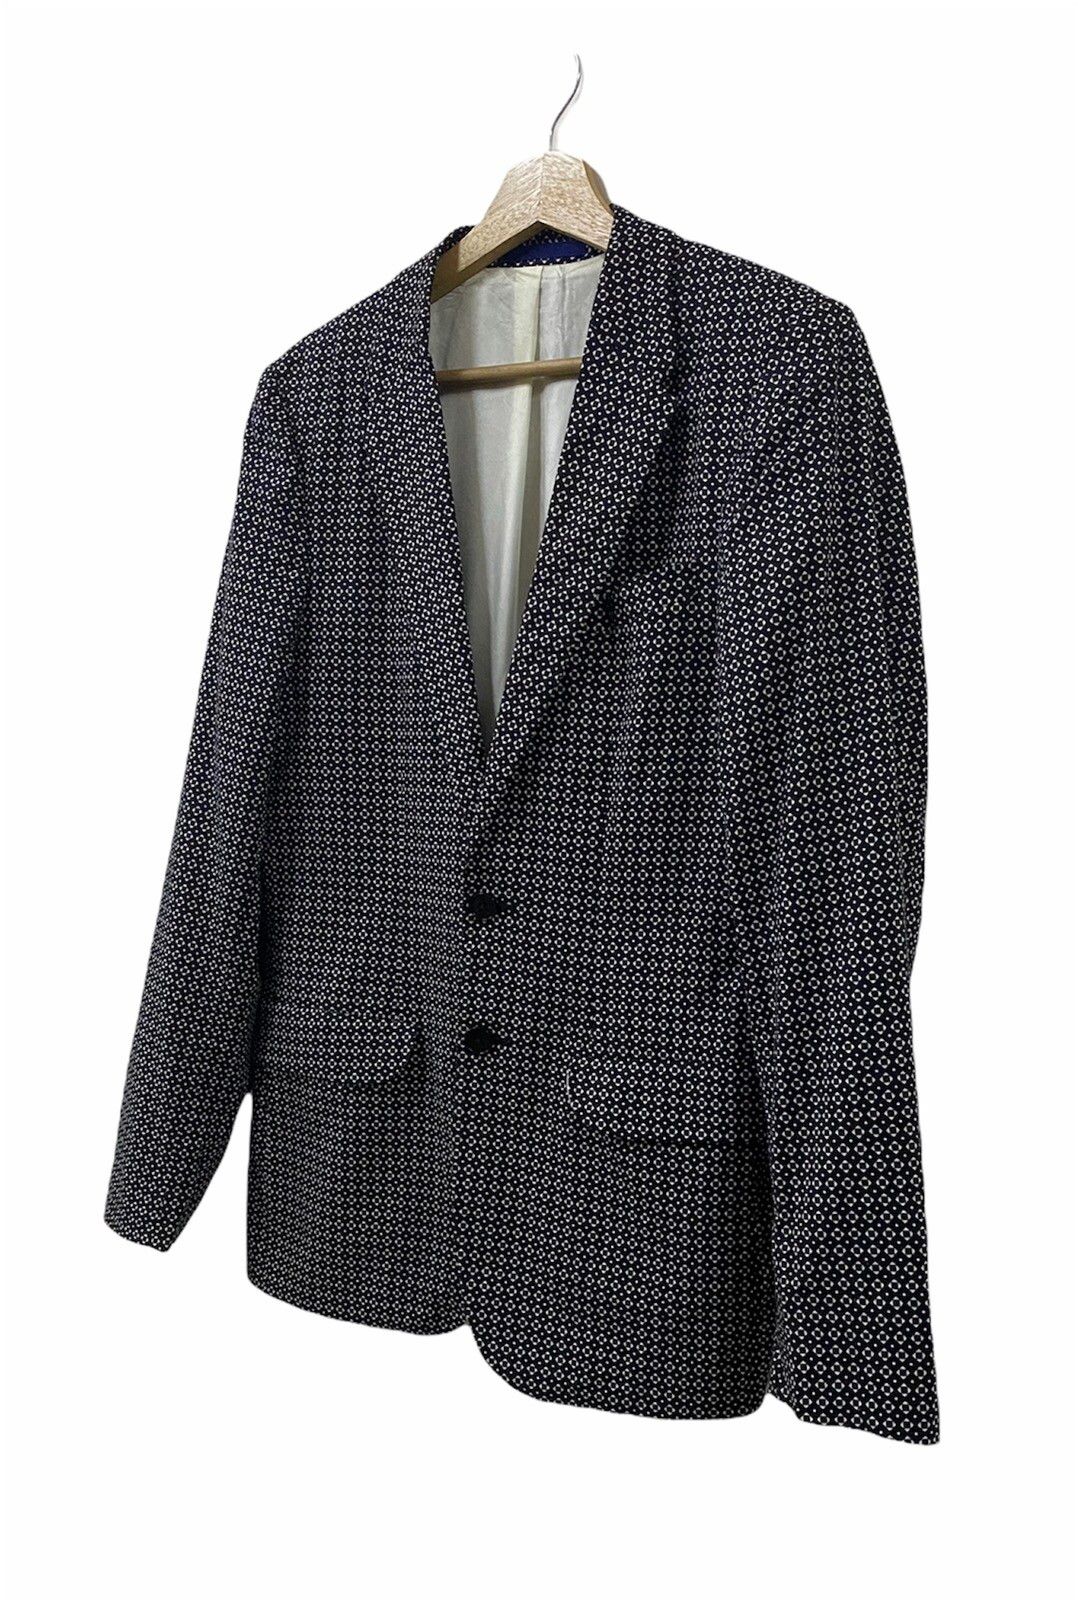 Rare🌑Paul Smith Uk Blazer Style Jacket Geometric Design - 9